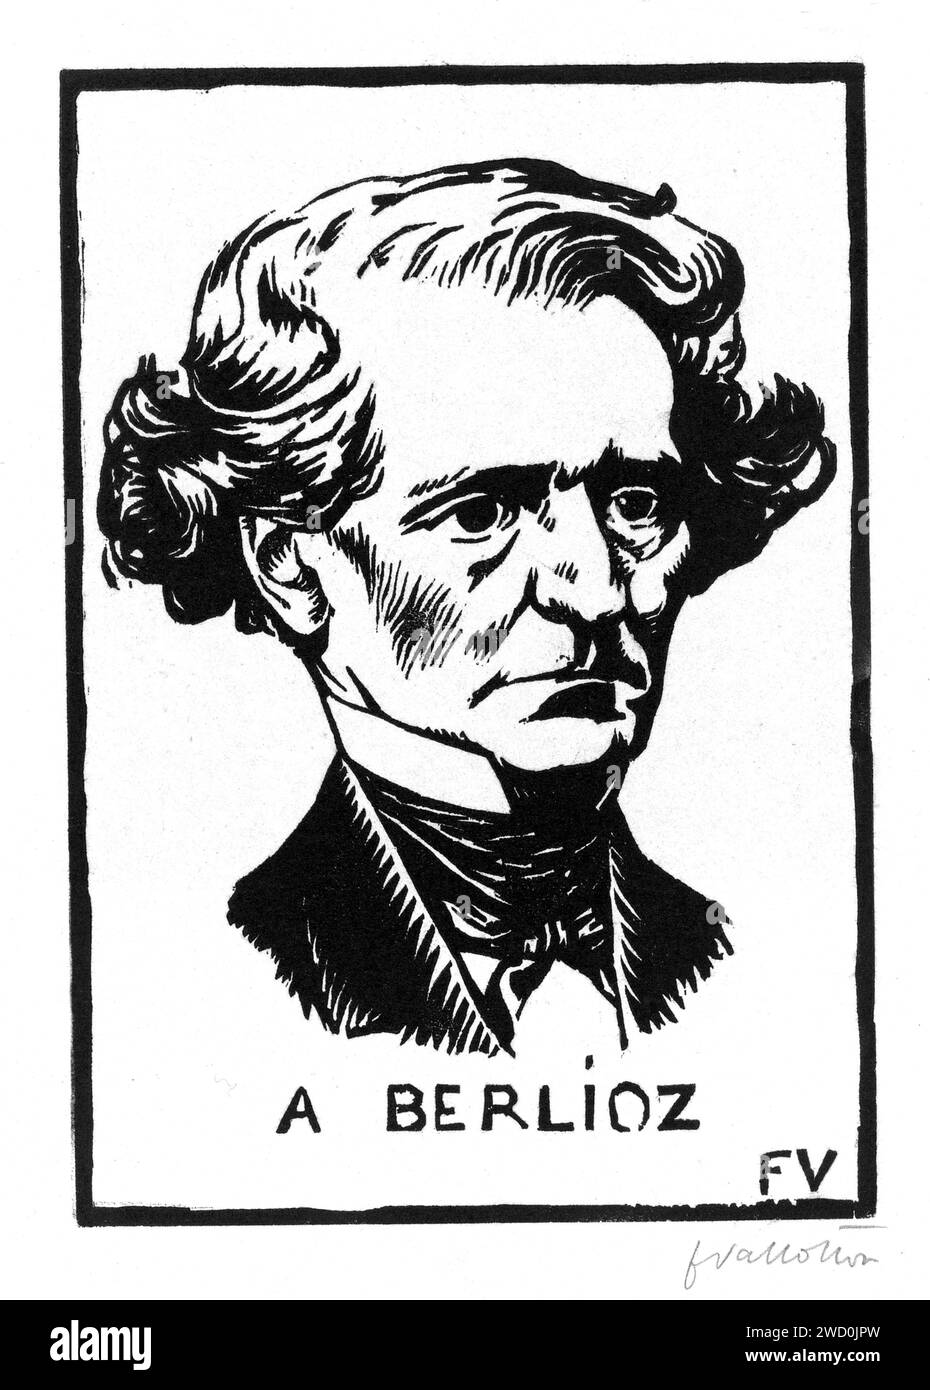 1860 c. , FRANCE : le compositeur français HECTOR BERLIOZ ( 1803 - 1869 ). Portrait gravé par Félix Edouard Vallotton , 1891 . - HISTOIRE - FOTO STORICHE - COMPOSITORE - OPERA LIRICA - CLASSICA - CLASSIQUE - PORTRAIT - RITRATTO - MUSICISTA - MUSICA - ILLUSTRAZIONE - ILLUSTRATION - GRAVURE - INCISIONE --- ARCHIVIO GBB Banque D'Images